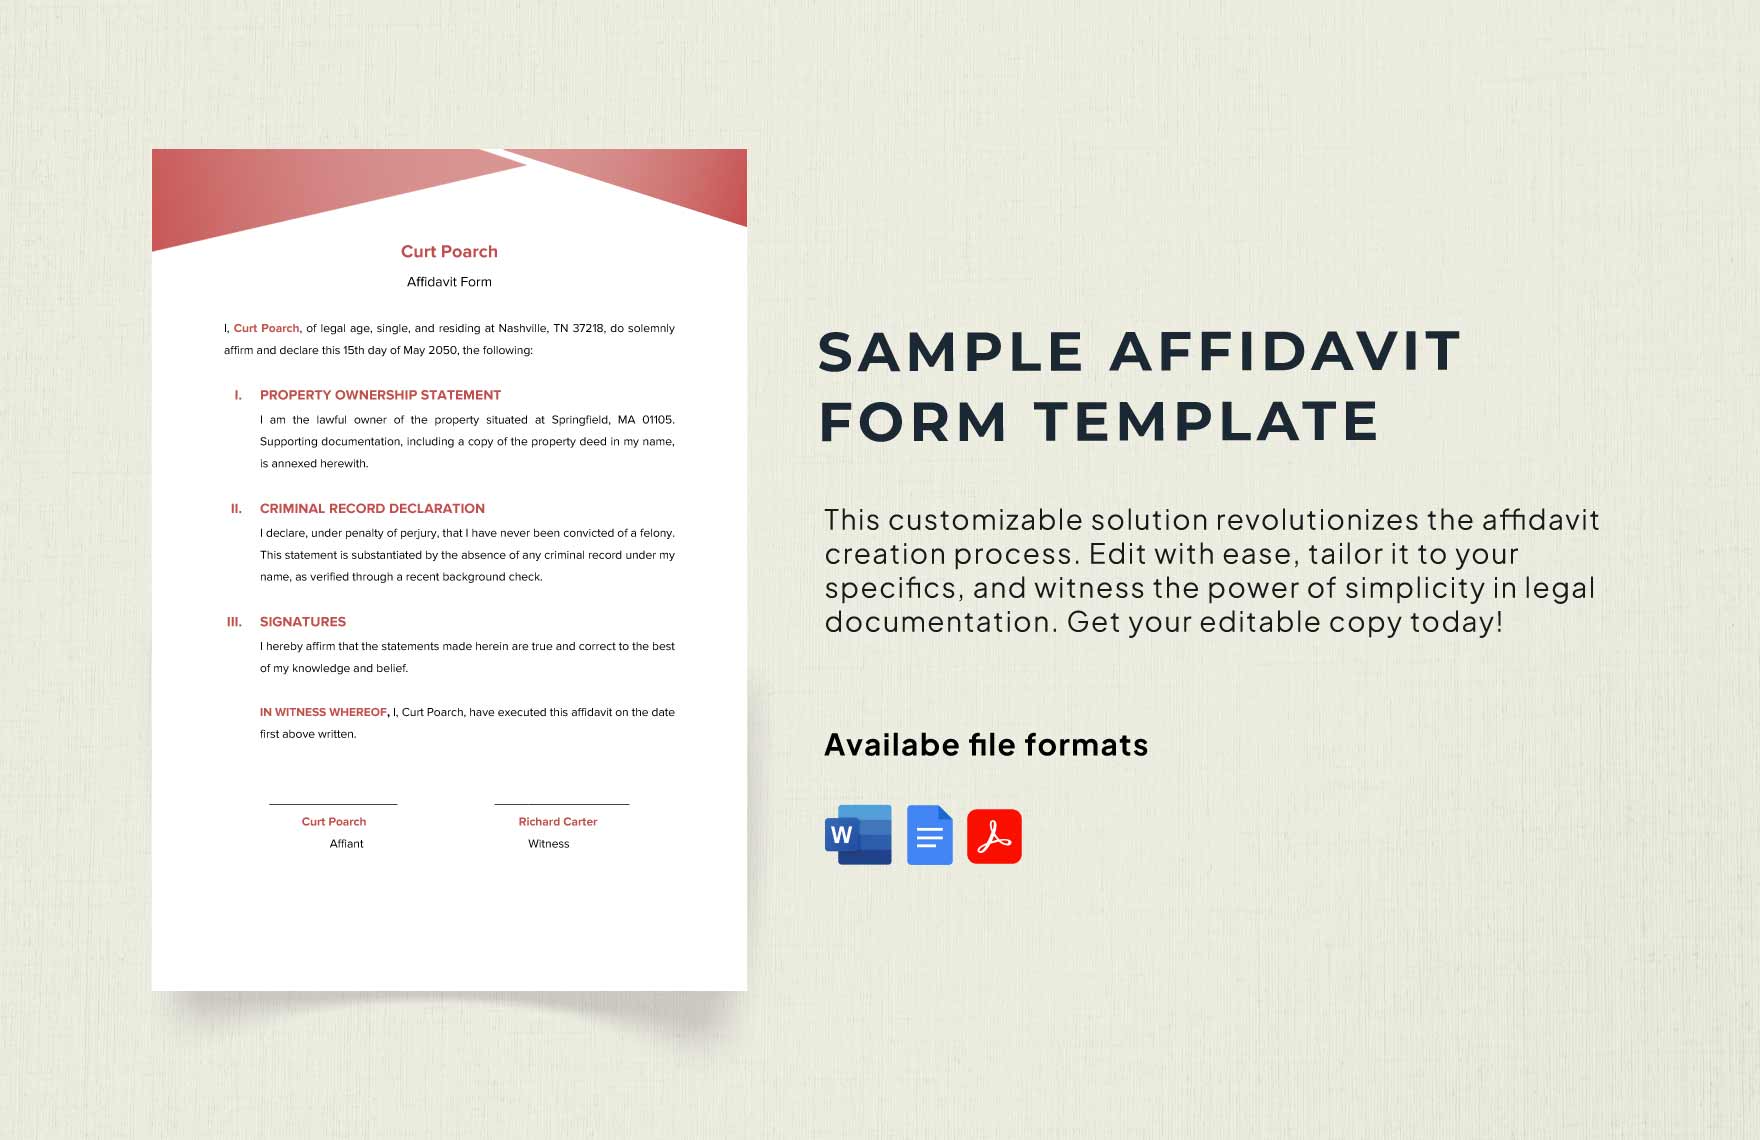 Free Sample Affidavit Form Template in Word, Google Docs, PDF